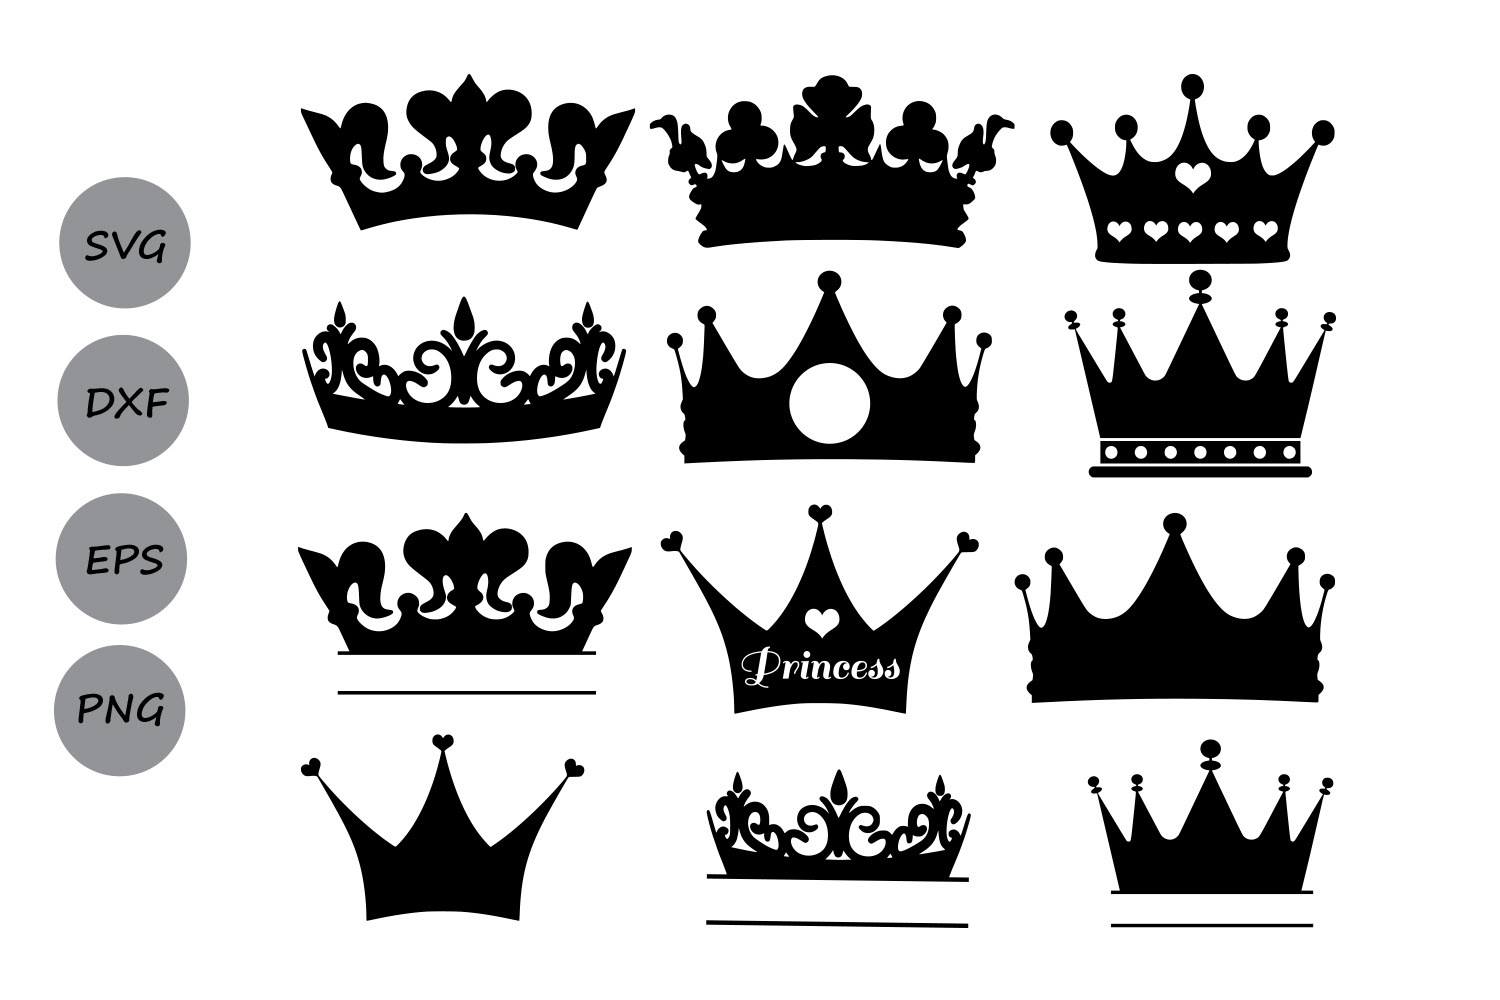 Download Free Crown Svg Vector : Queen crown Royalty Free Vector ...